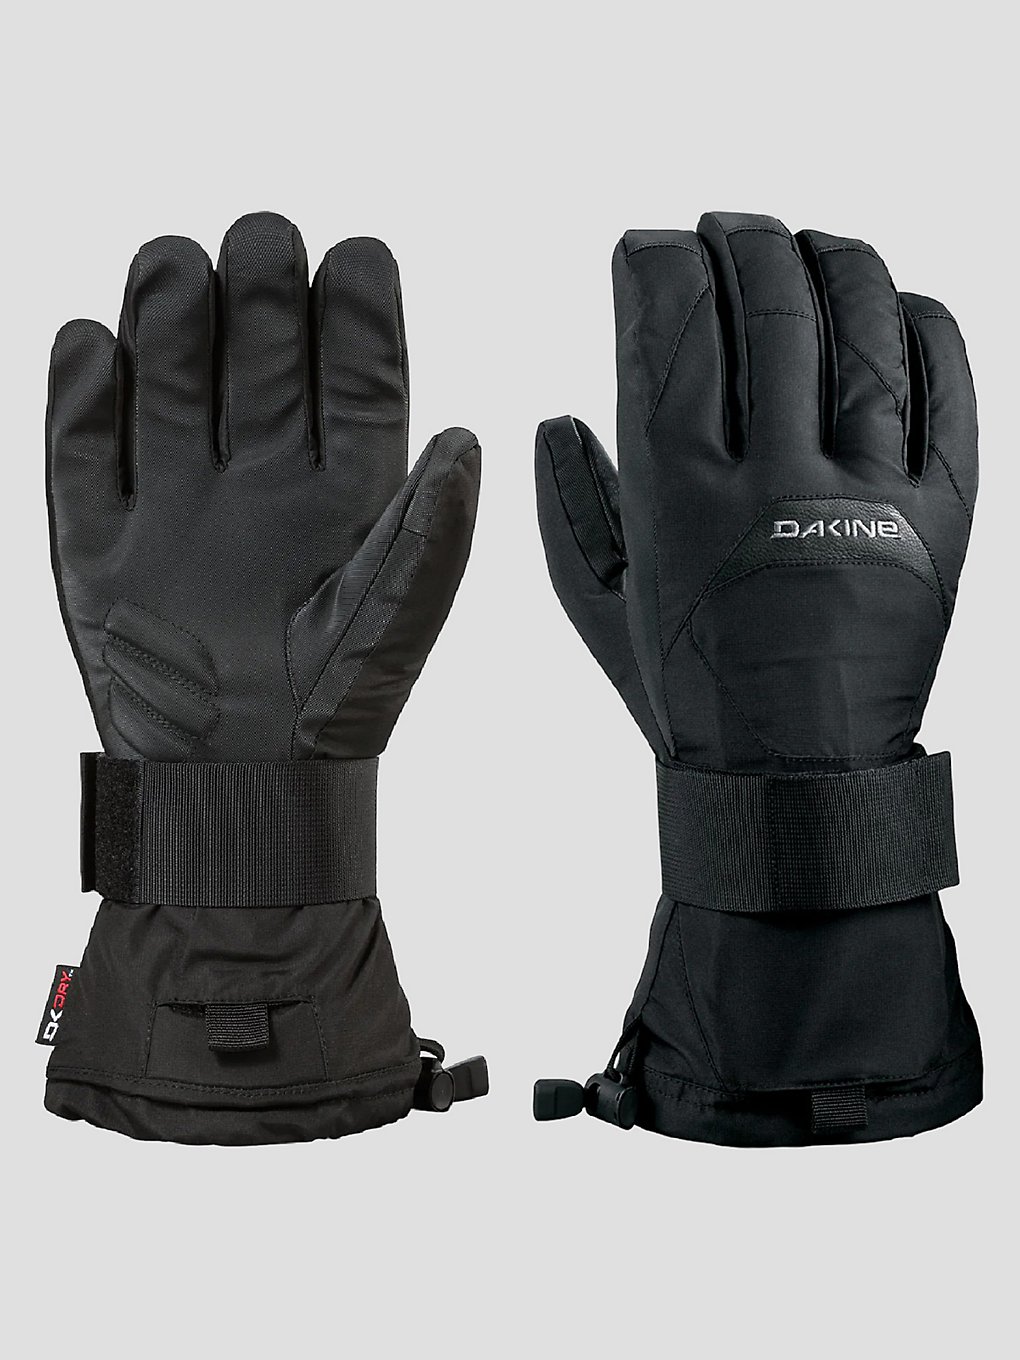 Dakine Wristguard Handschuhe black kaufen